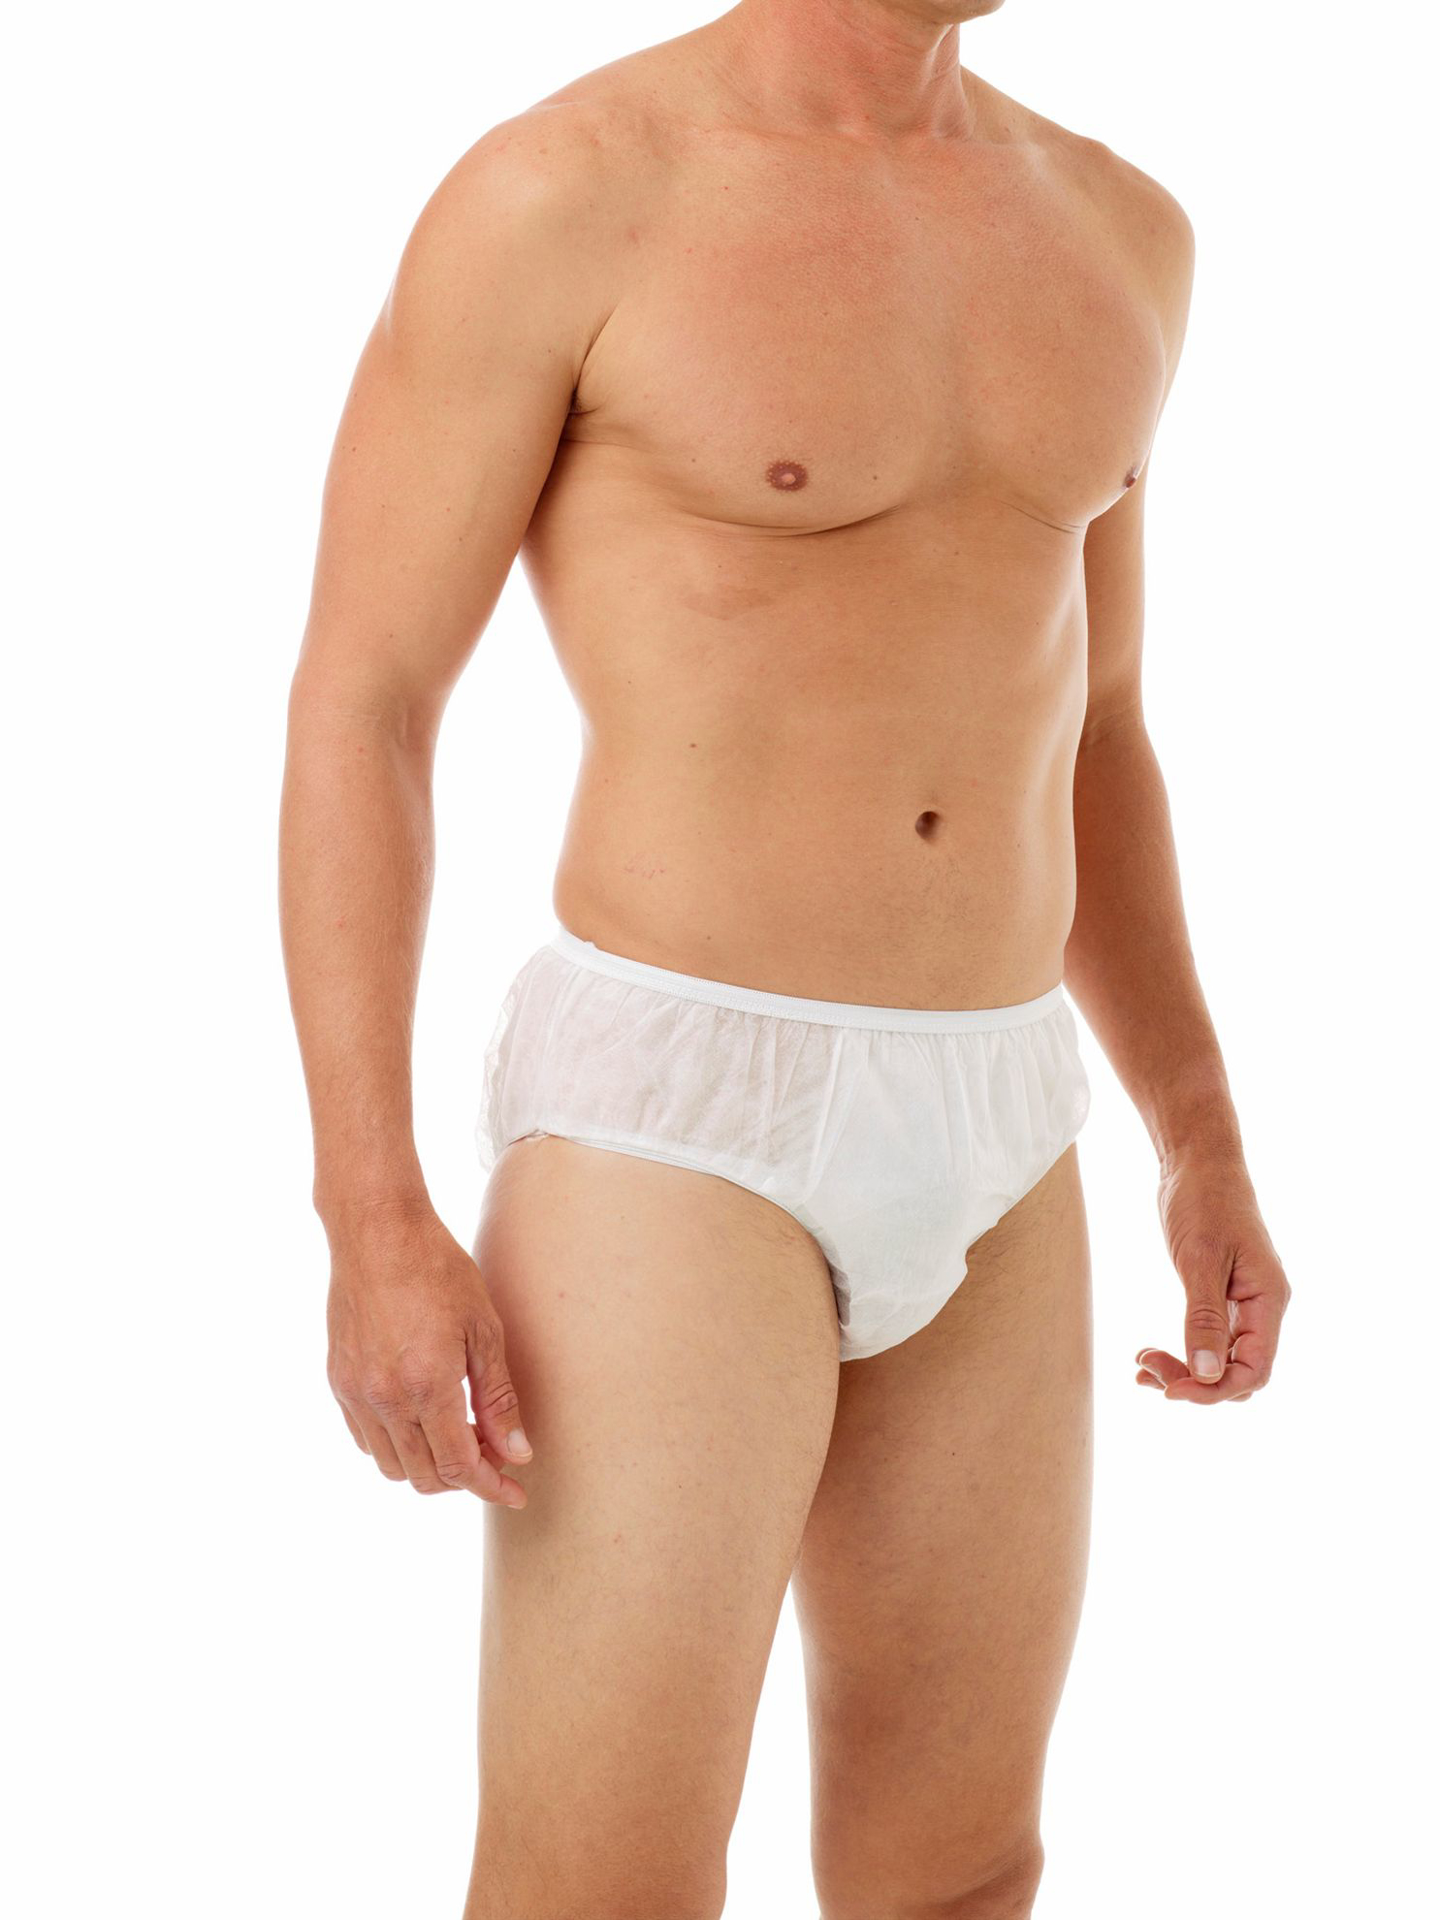 mens disposable underwear reviews